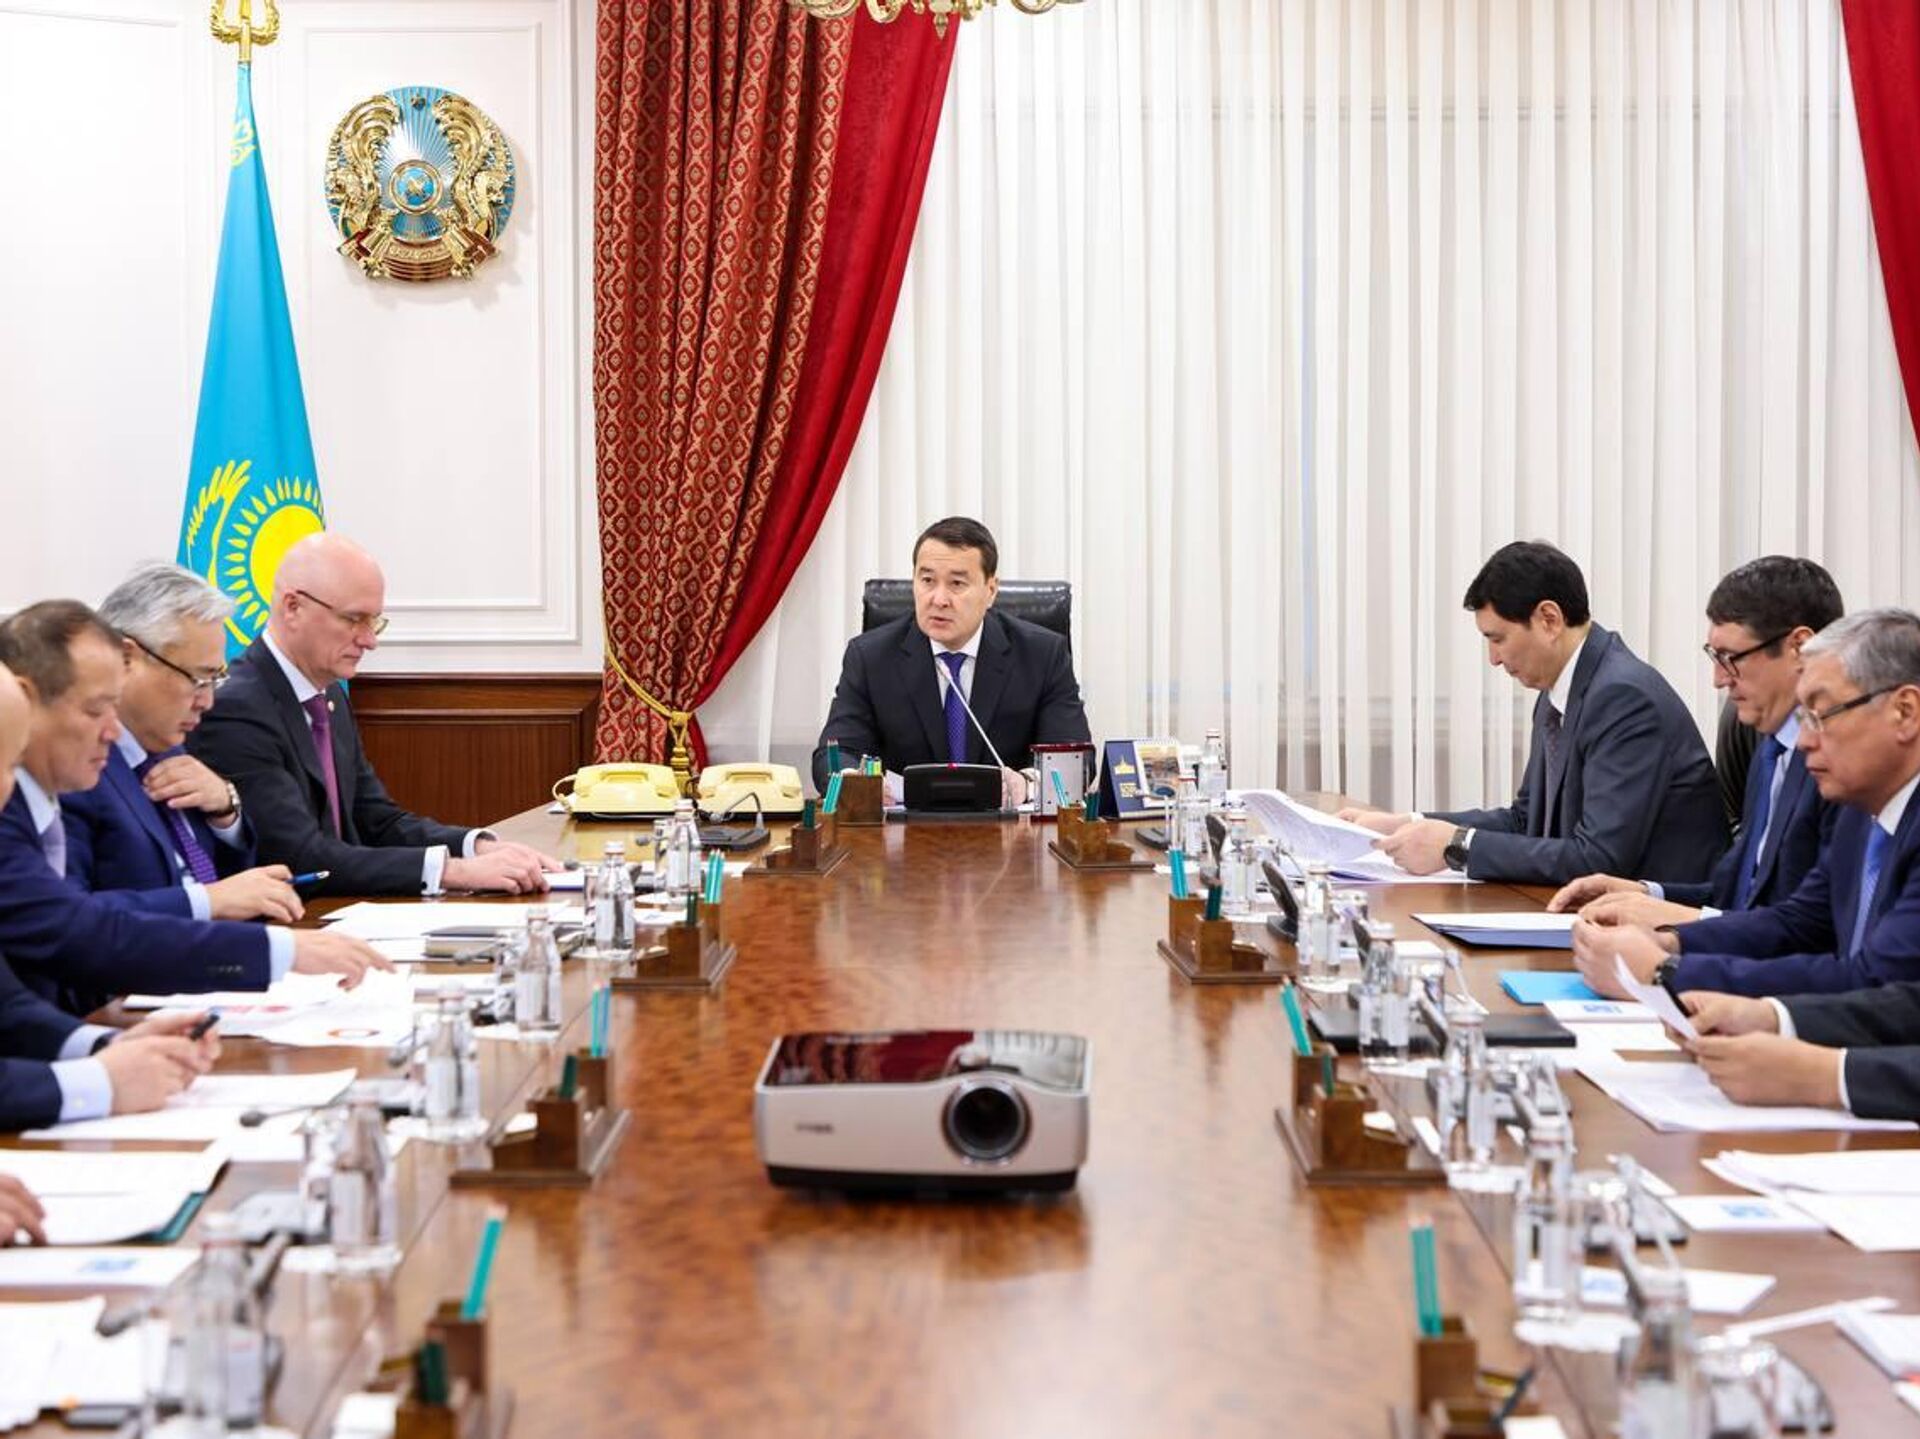 797 kz. Правительство Казахстана фото. Заседание ОДКБ 10 ноября 2022. Экономика Казахстана. Министр Казахстана фото.